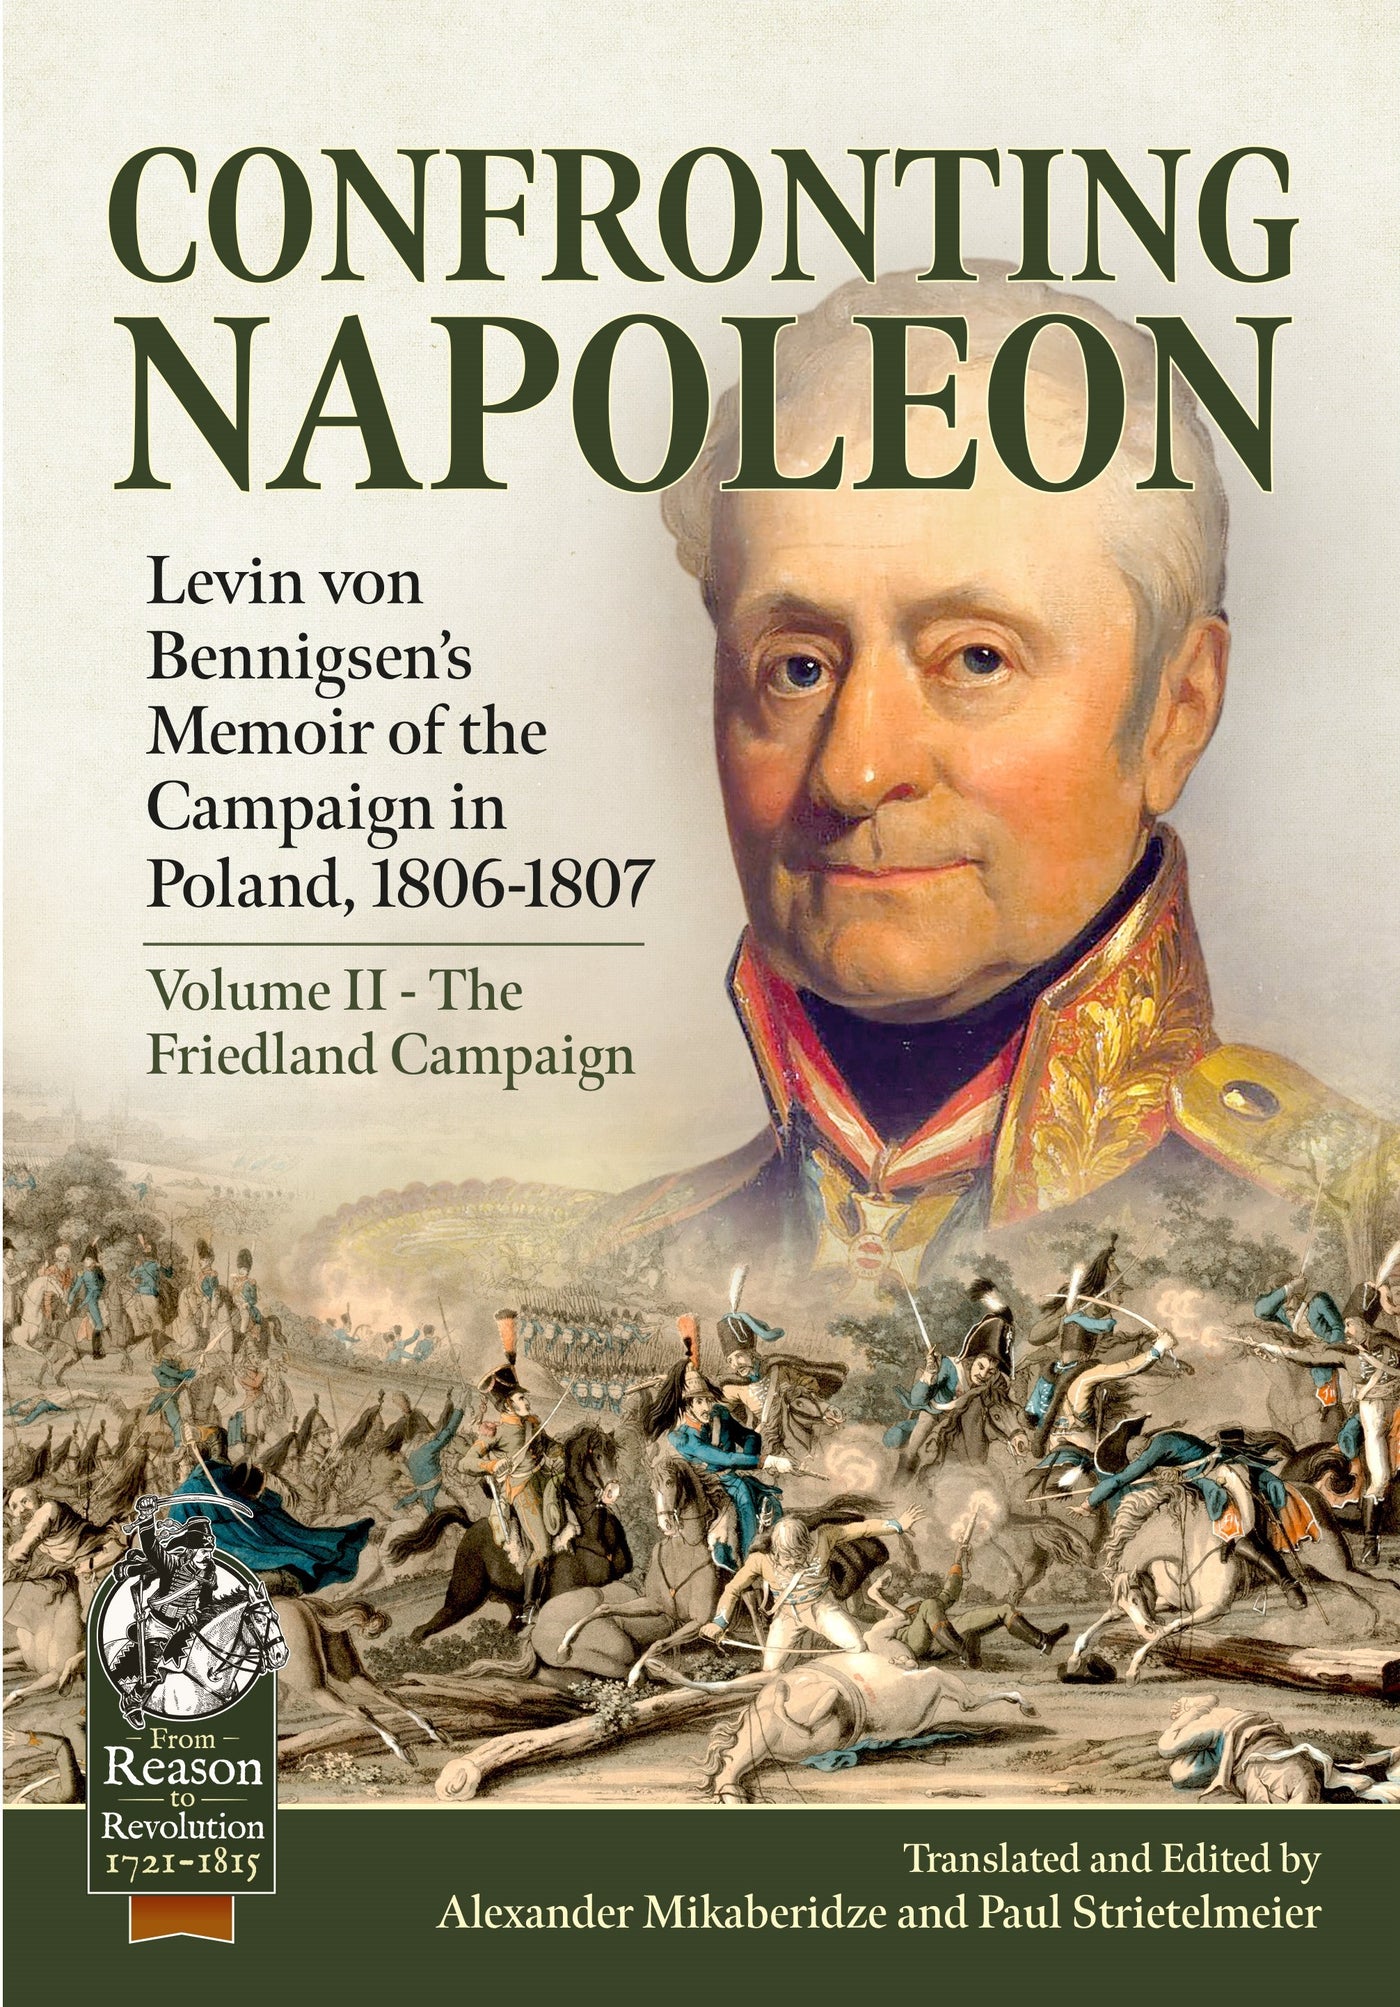 Confronting Napoleon: Levin von Bennigsen’s Memoir of the Campaign in Poland, 1806-1807